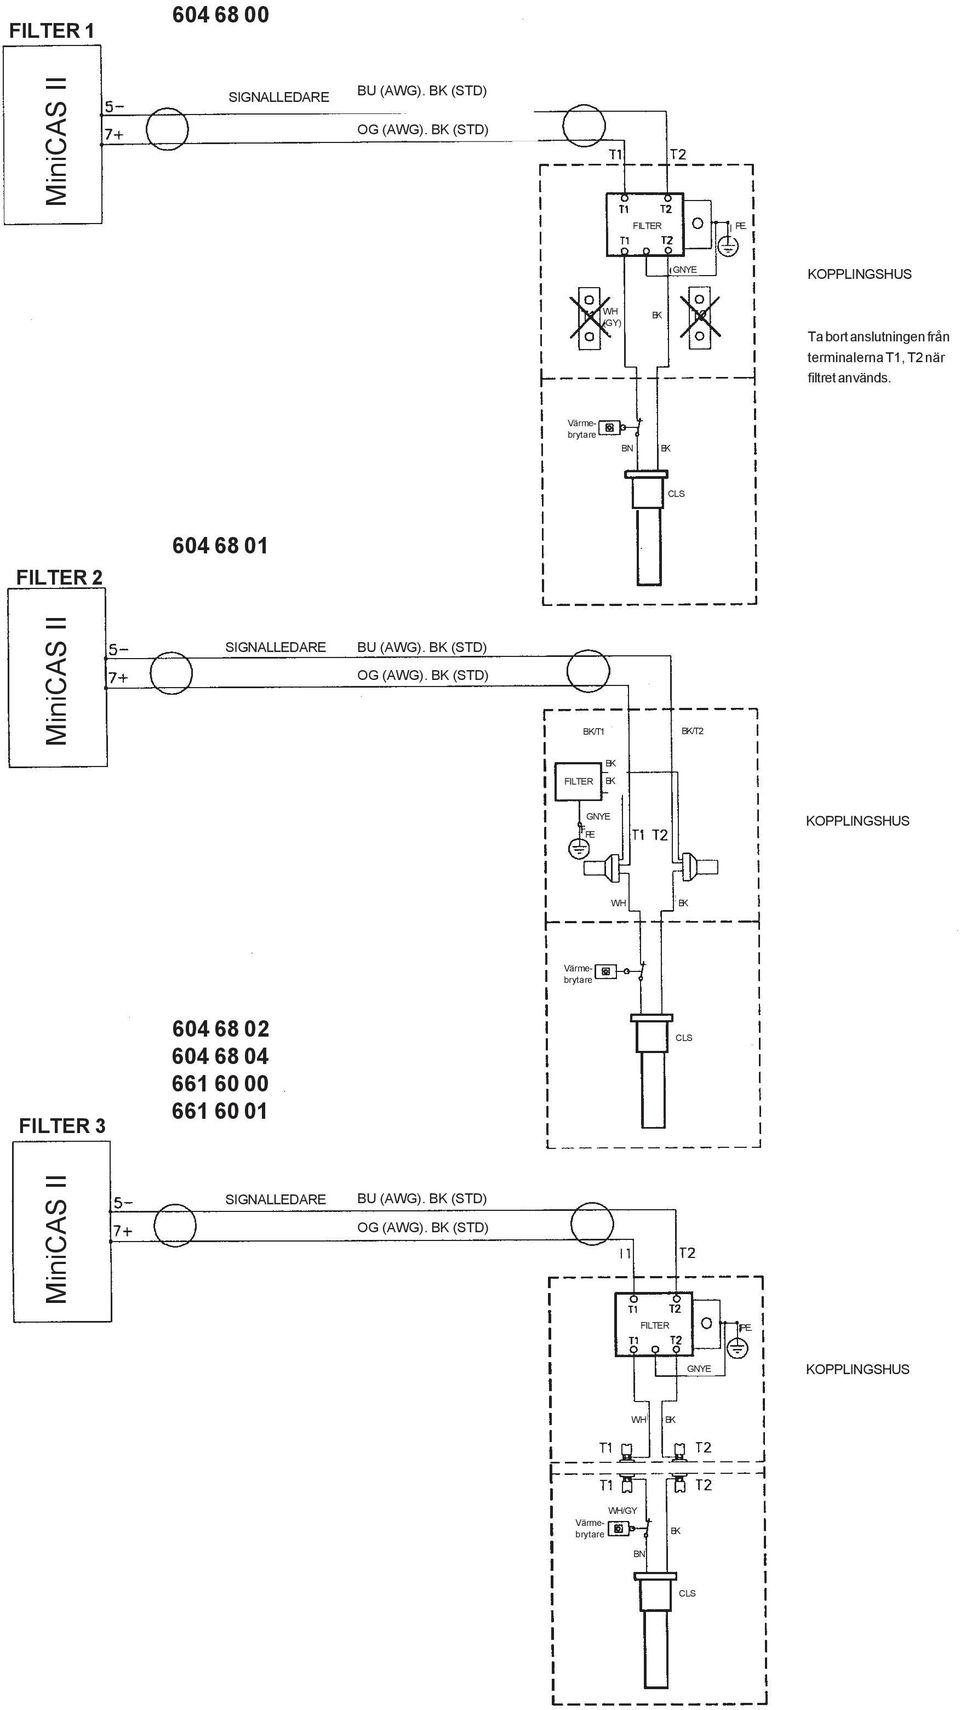 Värmebrytare Värmebrytare BN 604 68 01 FILTER MiniCAS II SIGNALLEDARE BU (AWG). (STD) OG (AWG).